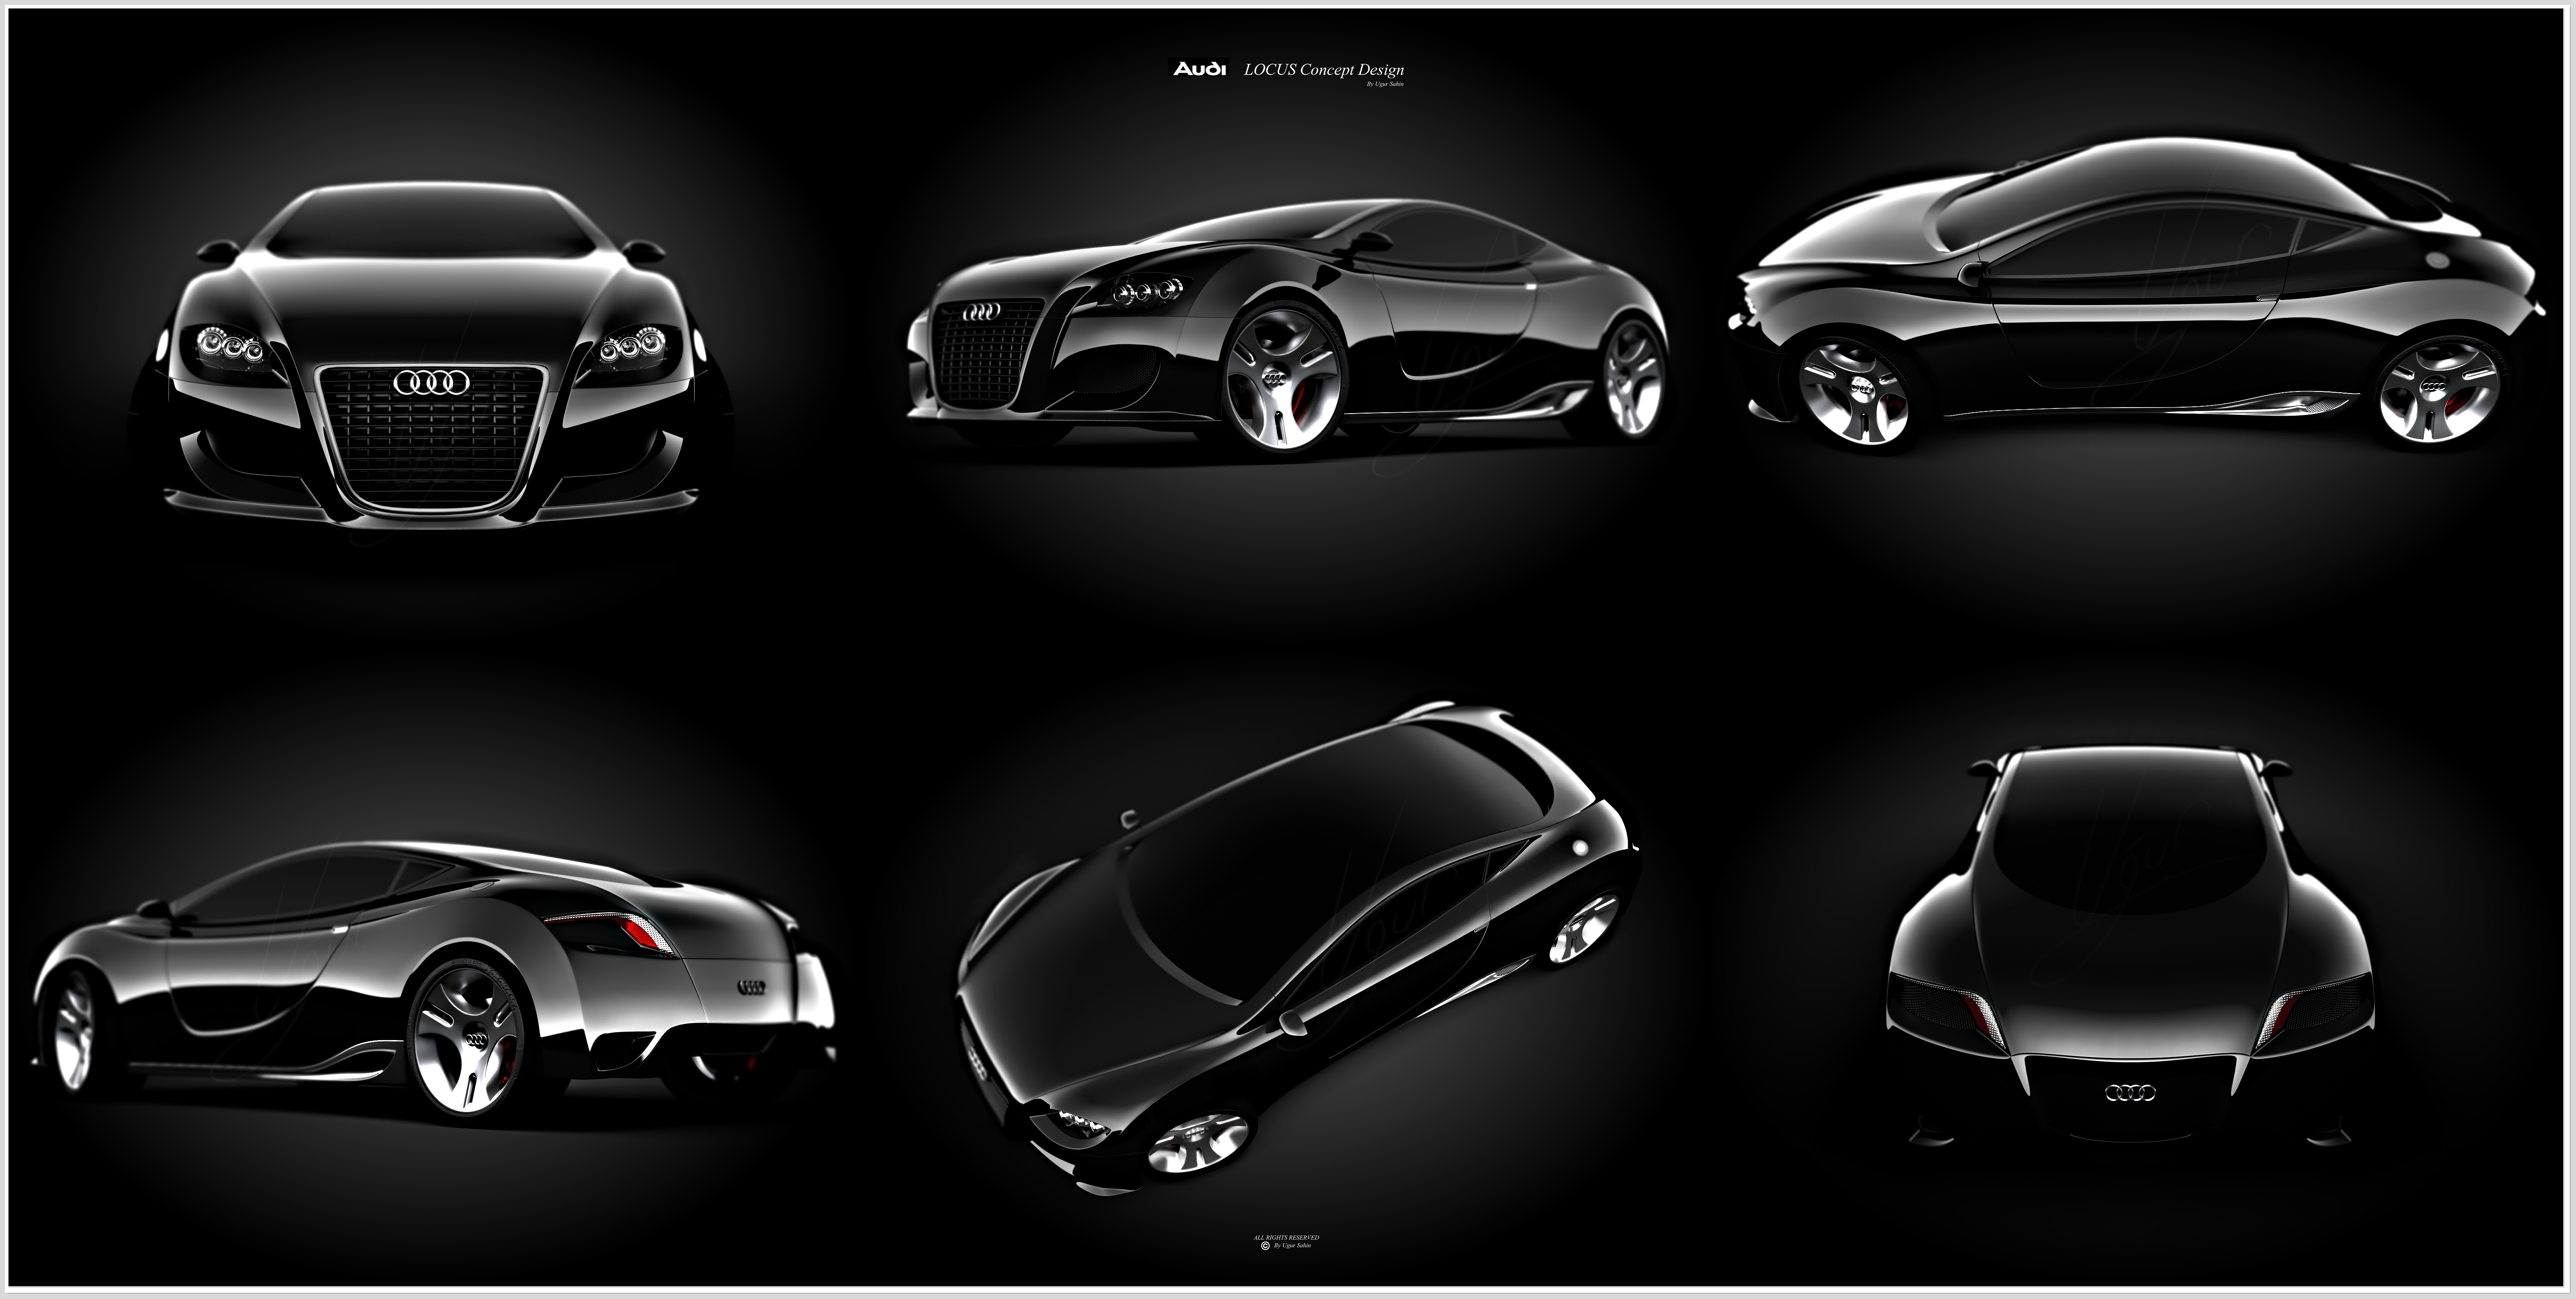 Audi_LOCUS_Concept_New_Renders_by_ugursahin1234